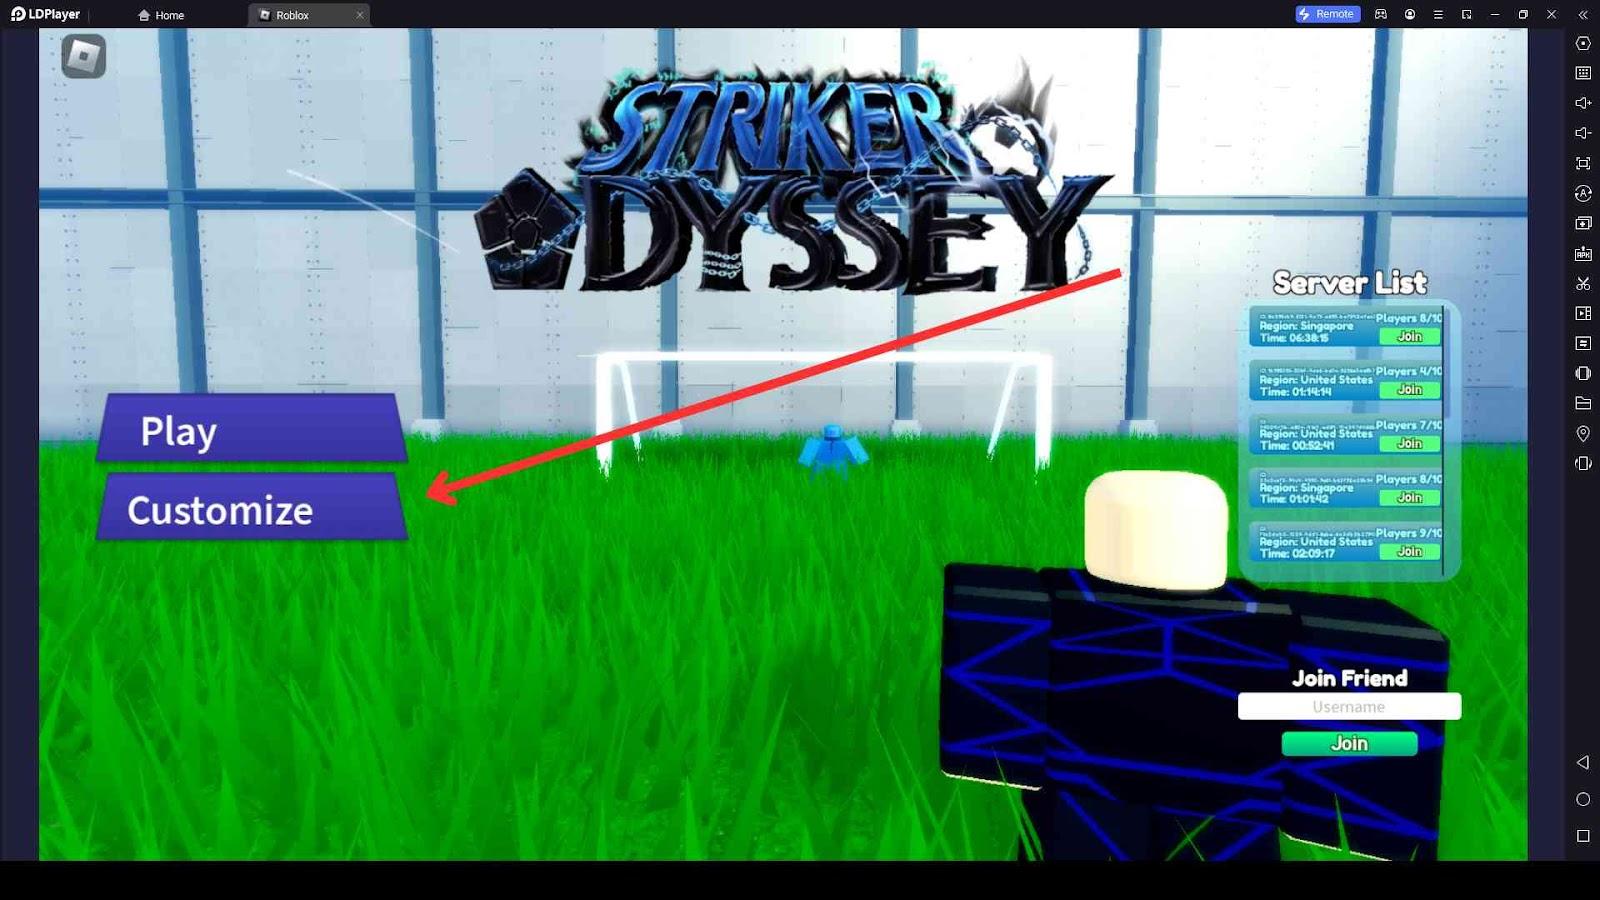 Roblox: Striker Odyssey Codes (November 2023)